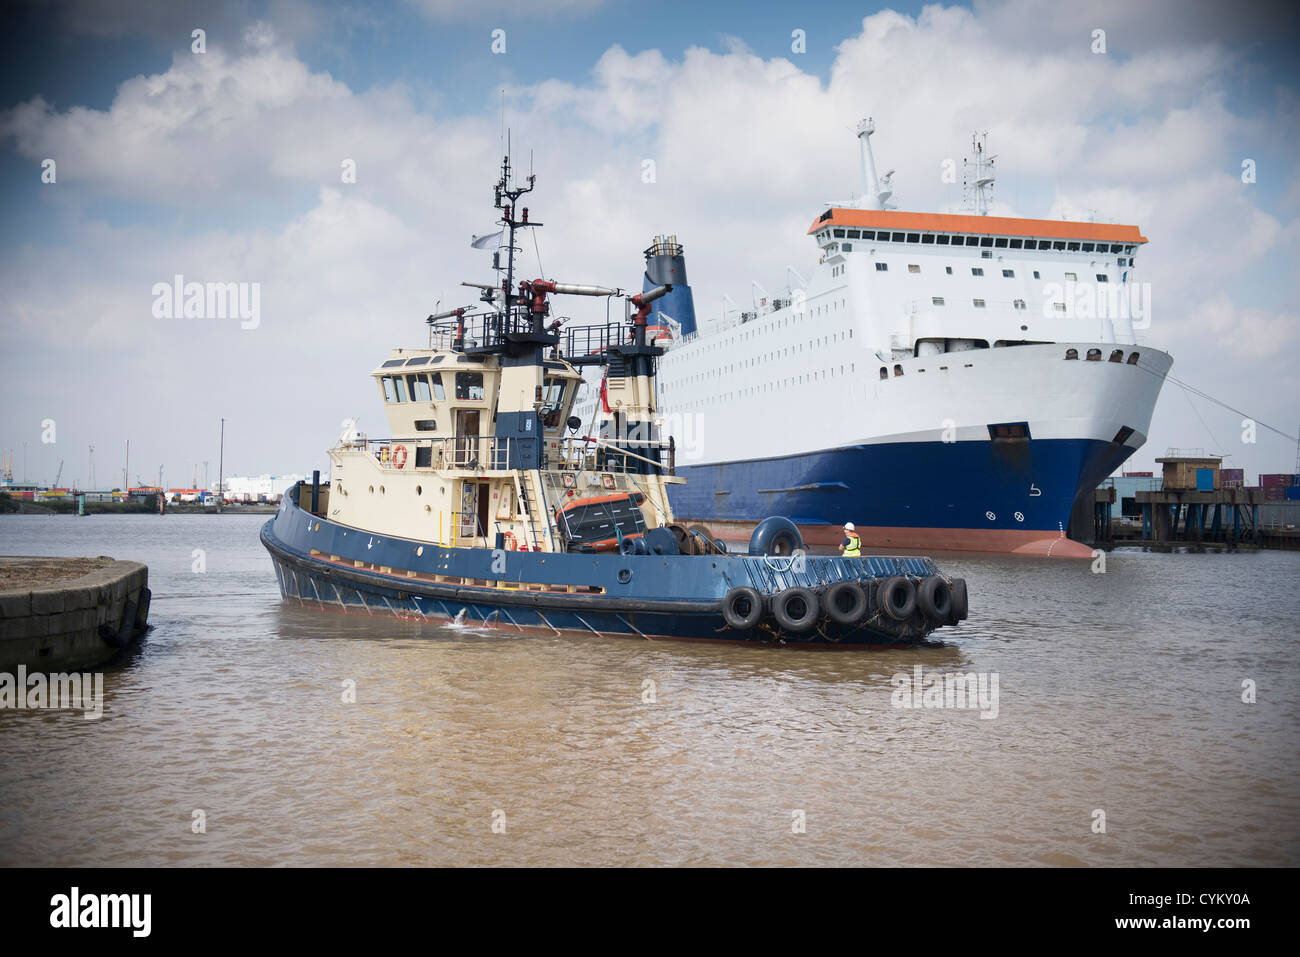 Tugboat sailing in urban harbor Stock Photo